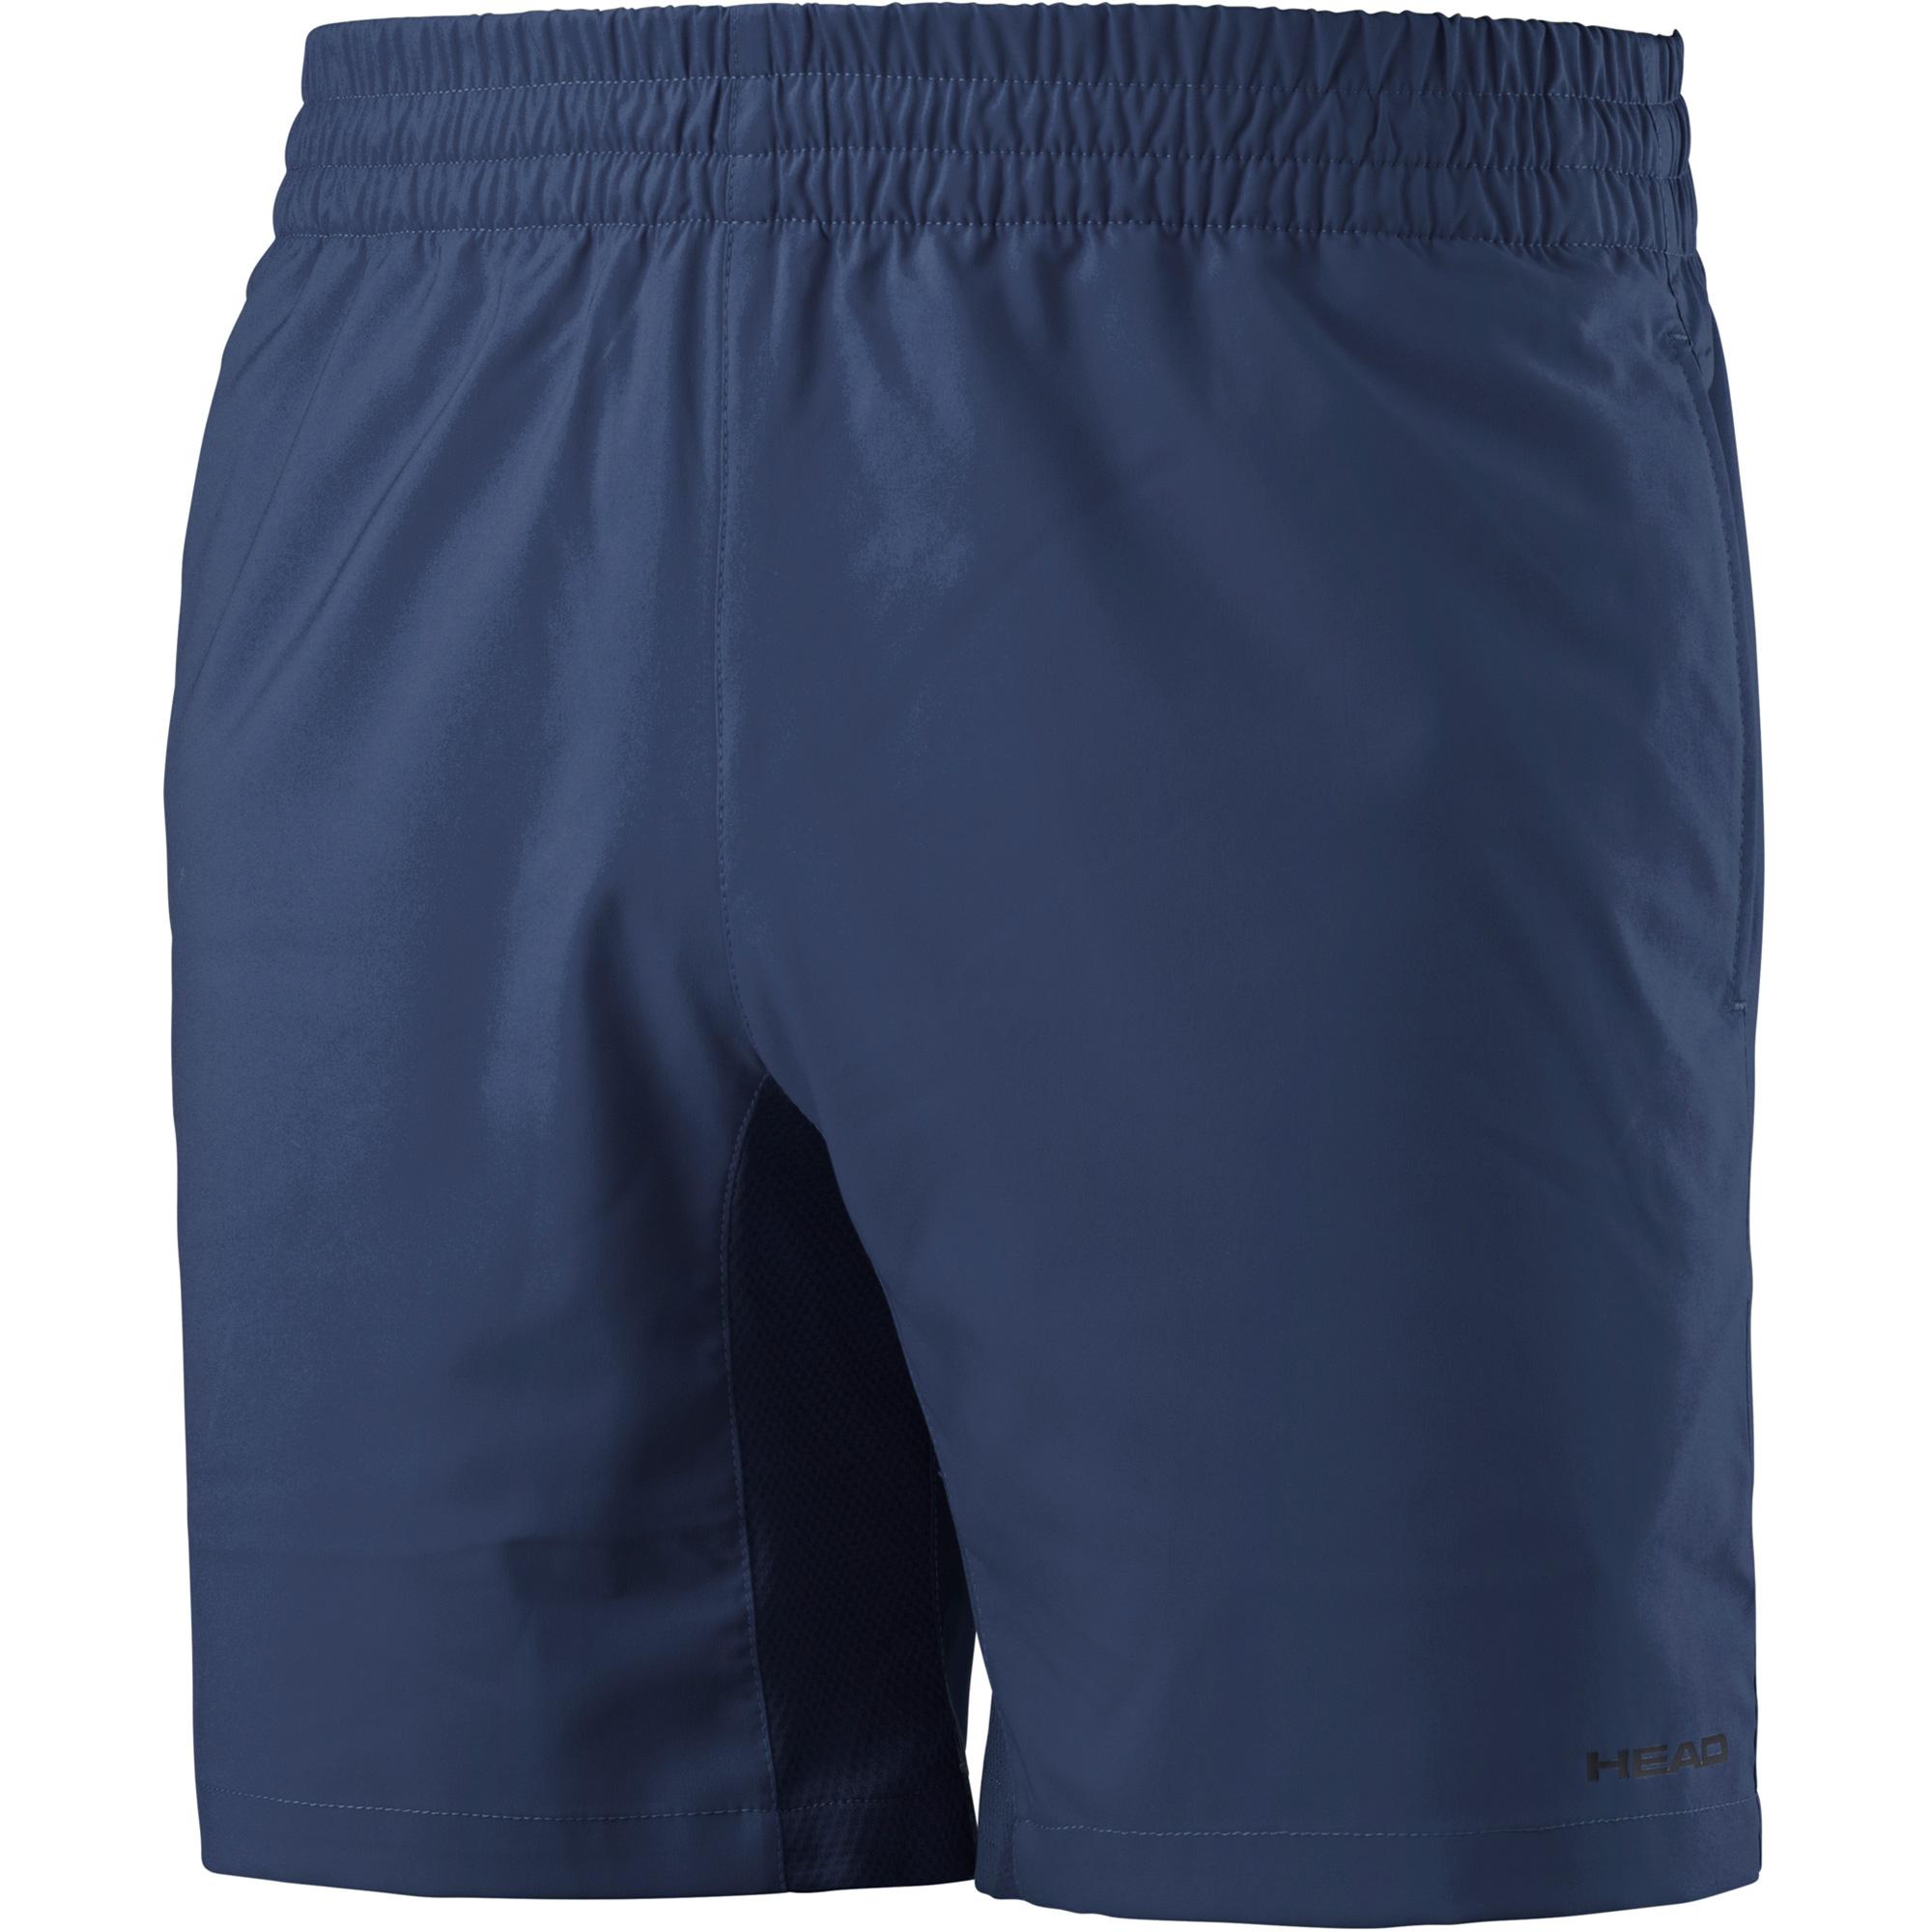 Head Mens Club Shorts - Navy - Tennisnuts.com